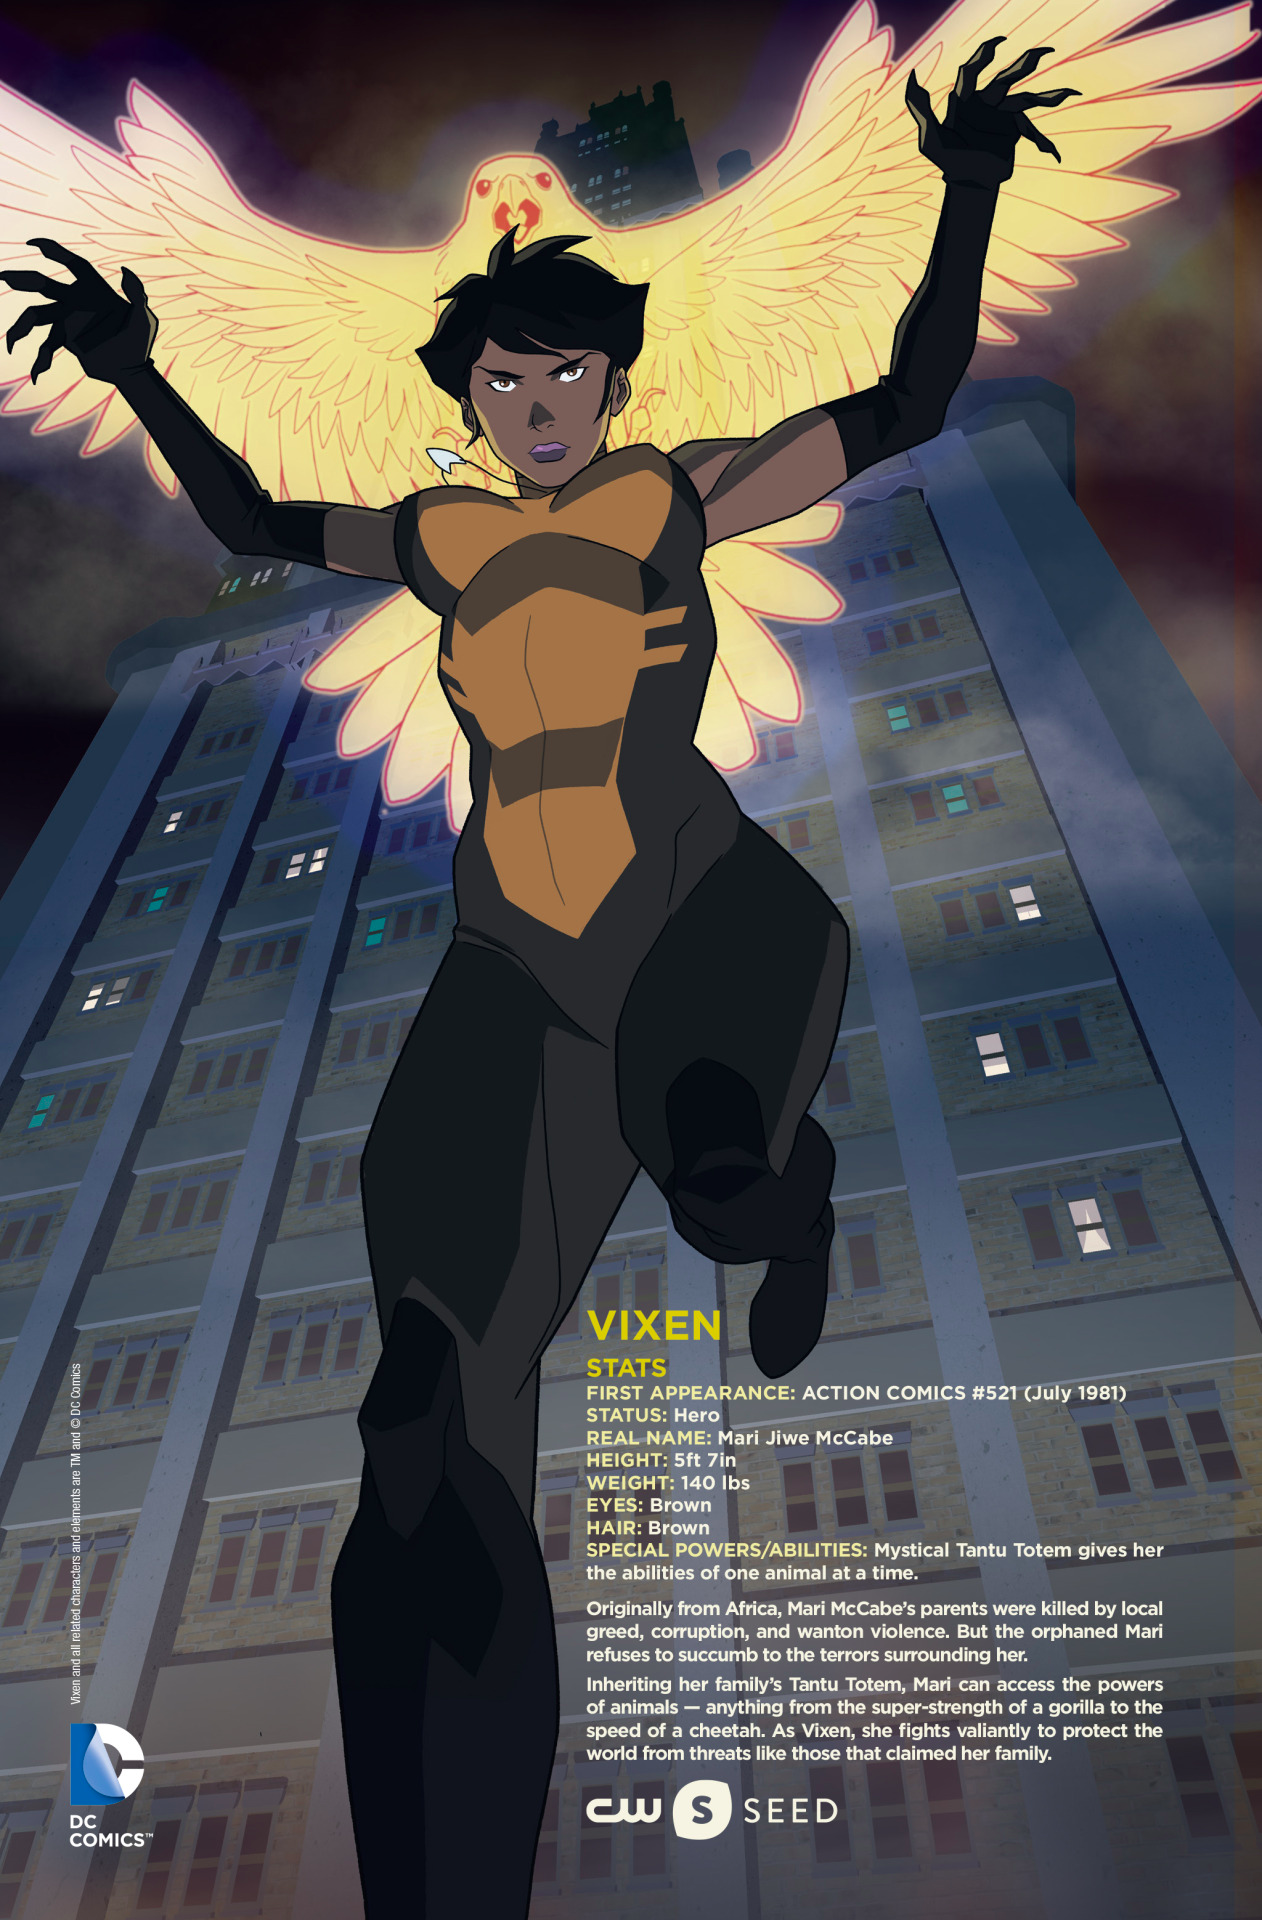 Vixen (DC Comics) by Blue-Leader97 on DeviantArt